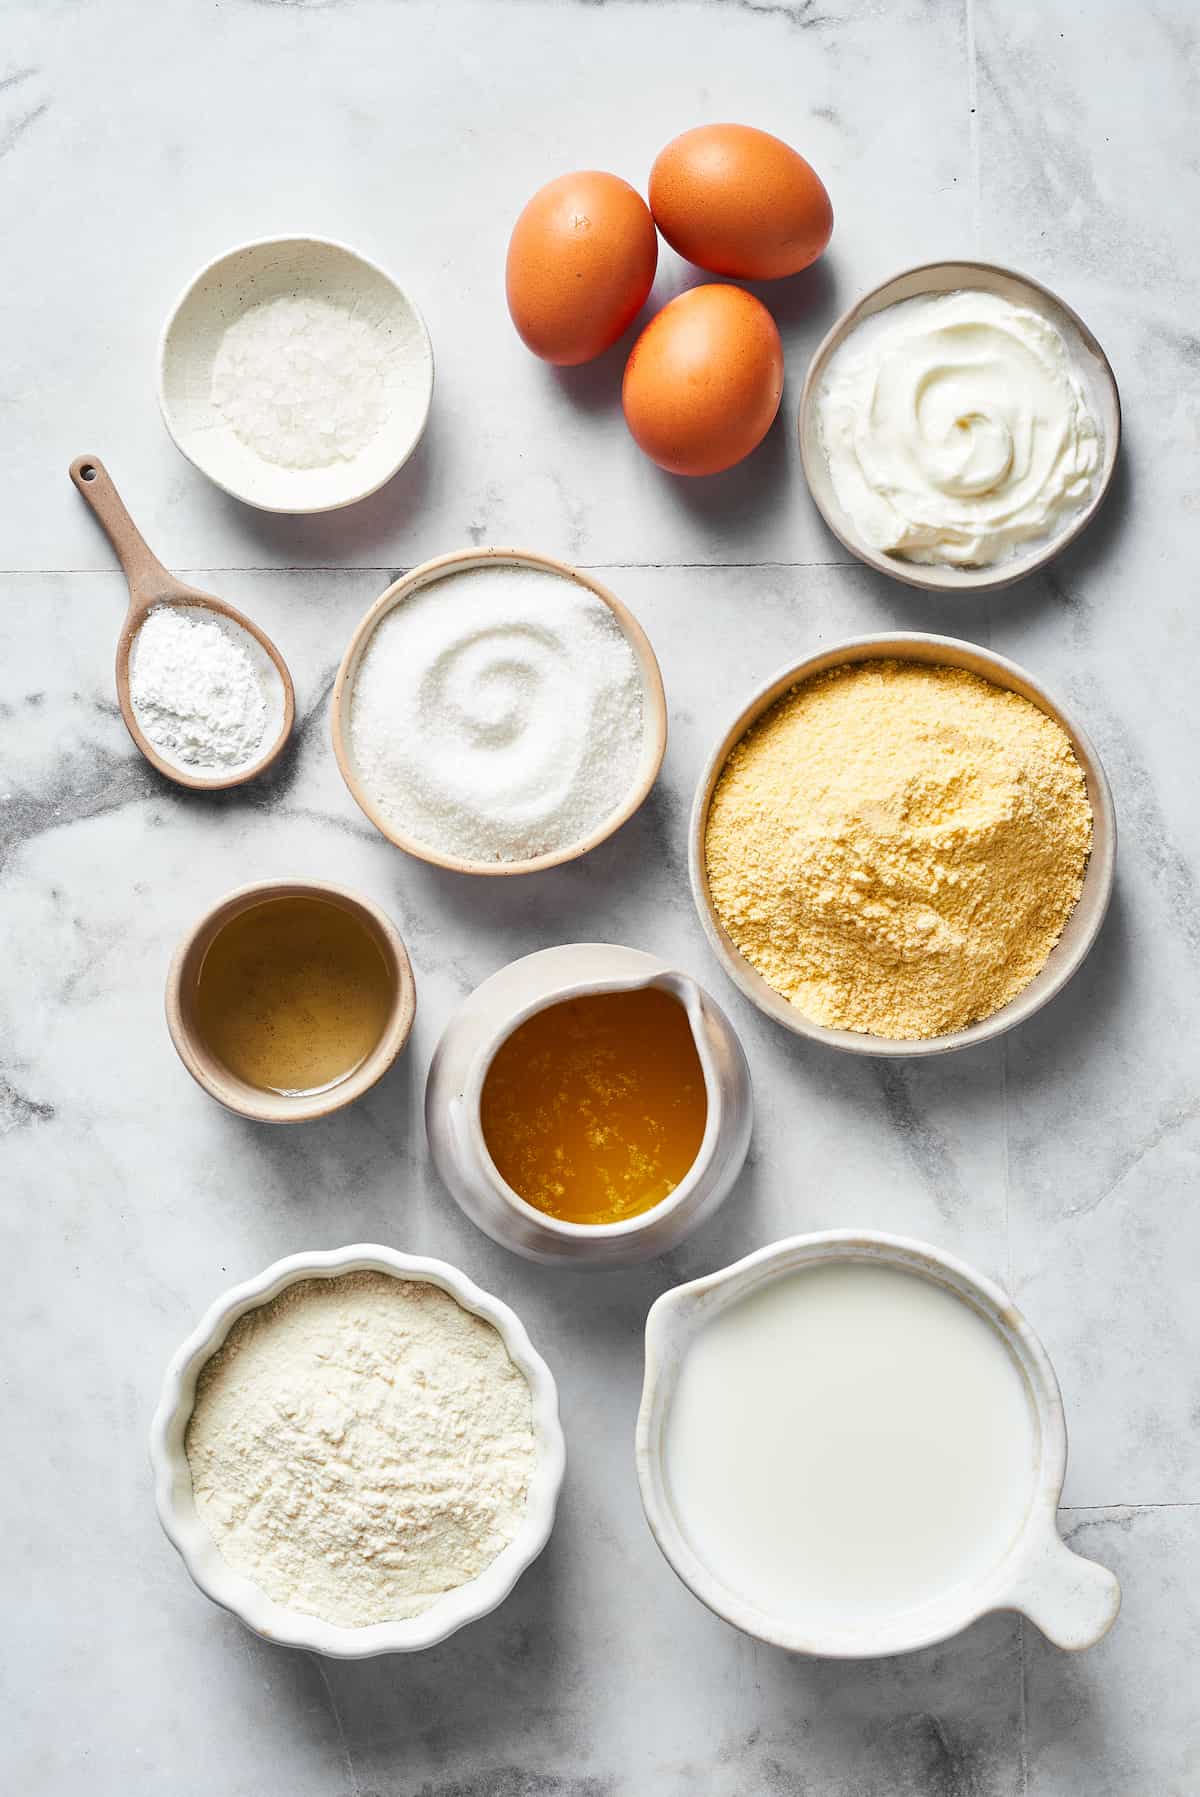 From top: Salt, eggs, sour cream, baking powder, sugar, cornmeal, oil, melted butter, flour, milk.